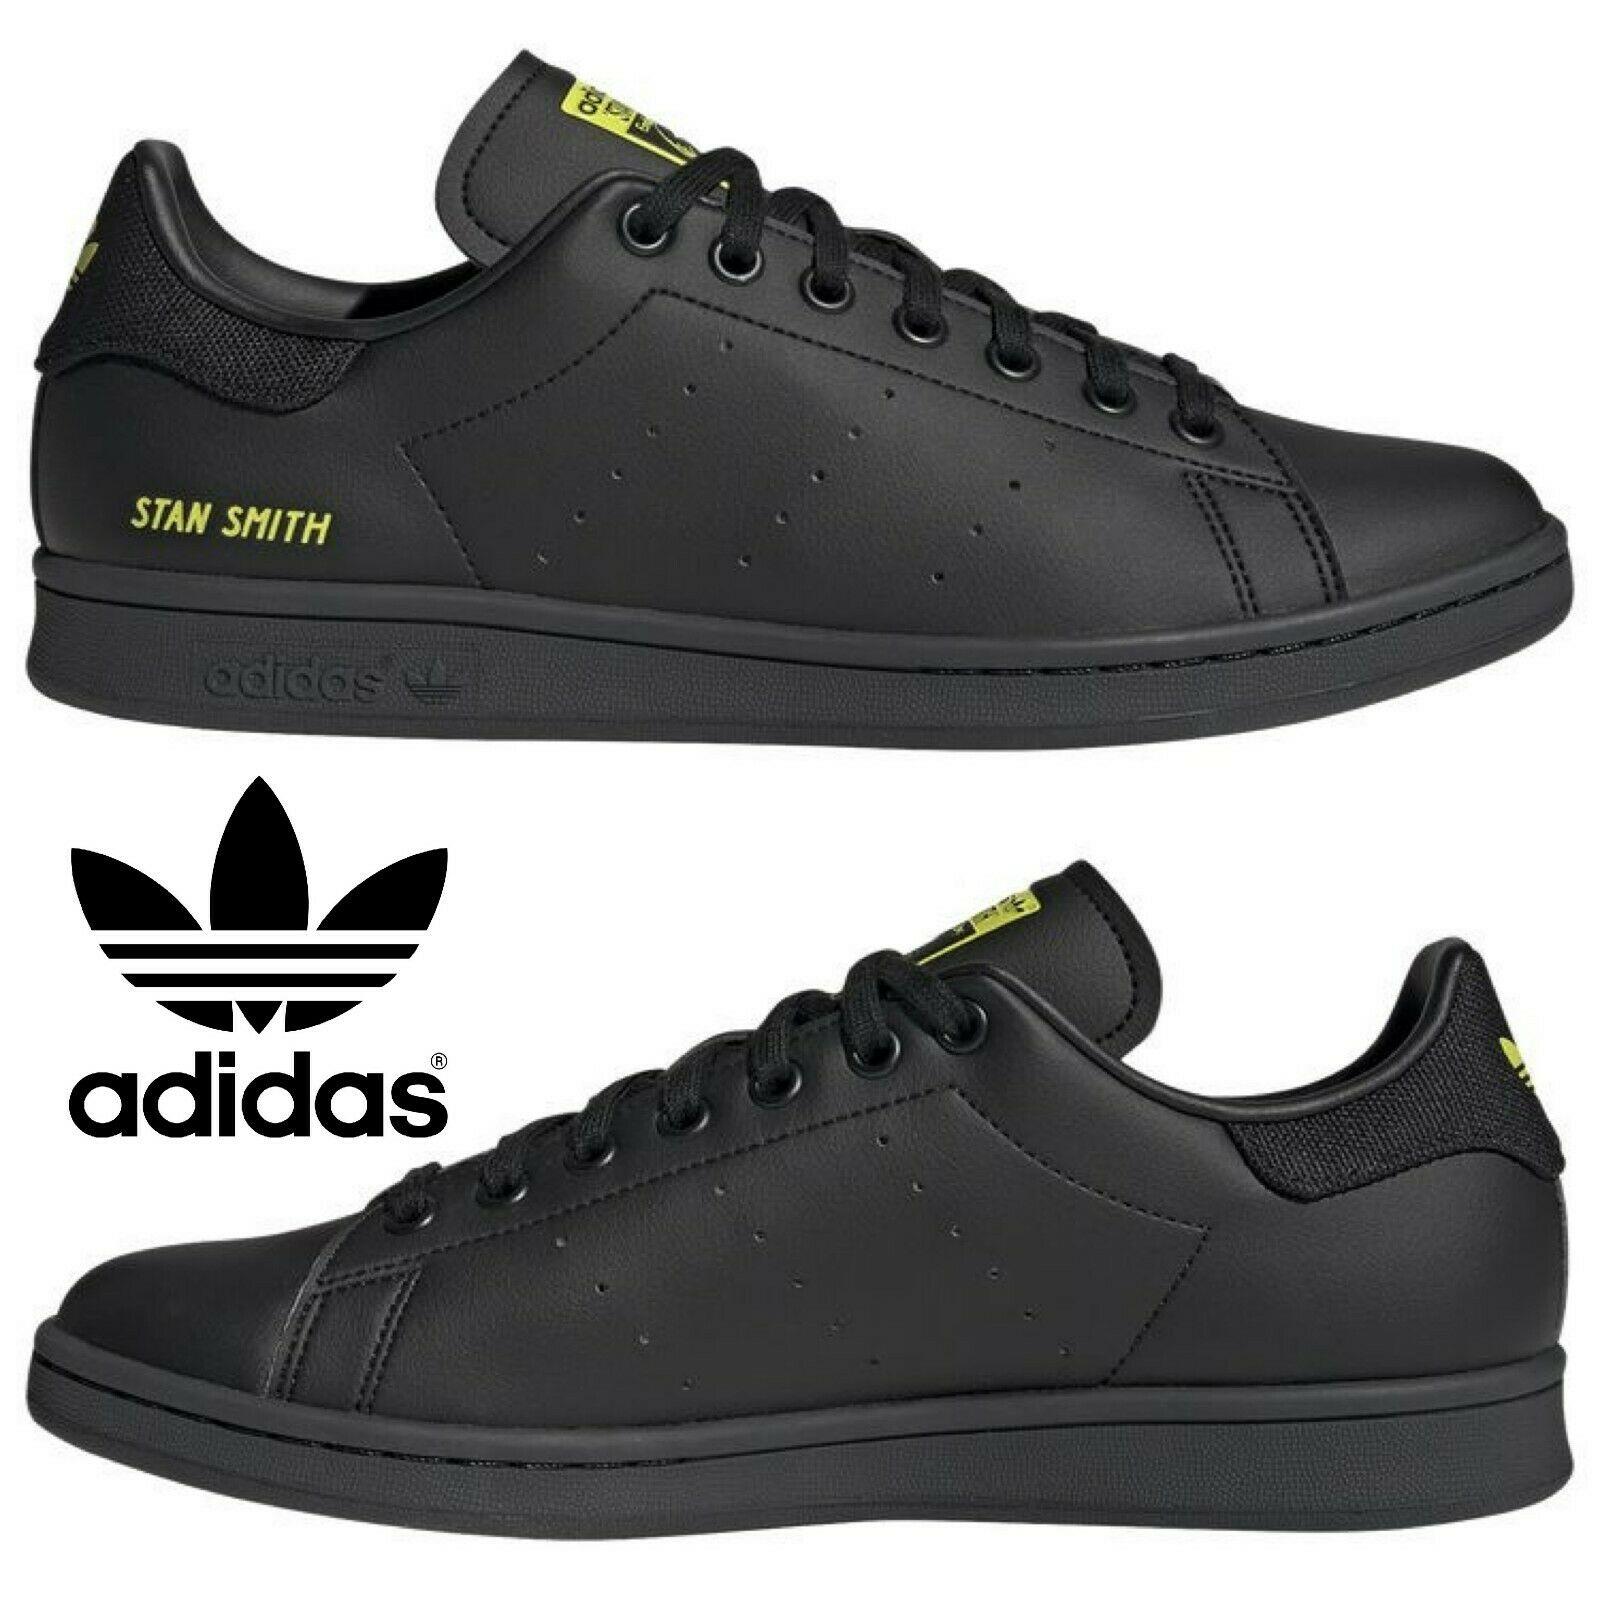 Adidas Originals Stan Smith Winterized Men`s Sneakers Comfort Sport Casual Shoes - Black , Black/Volt Manufacturer